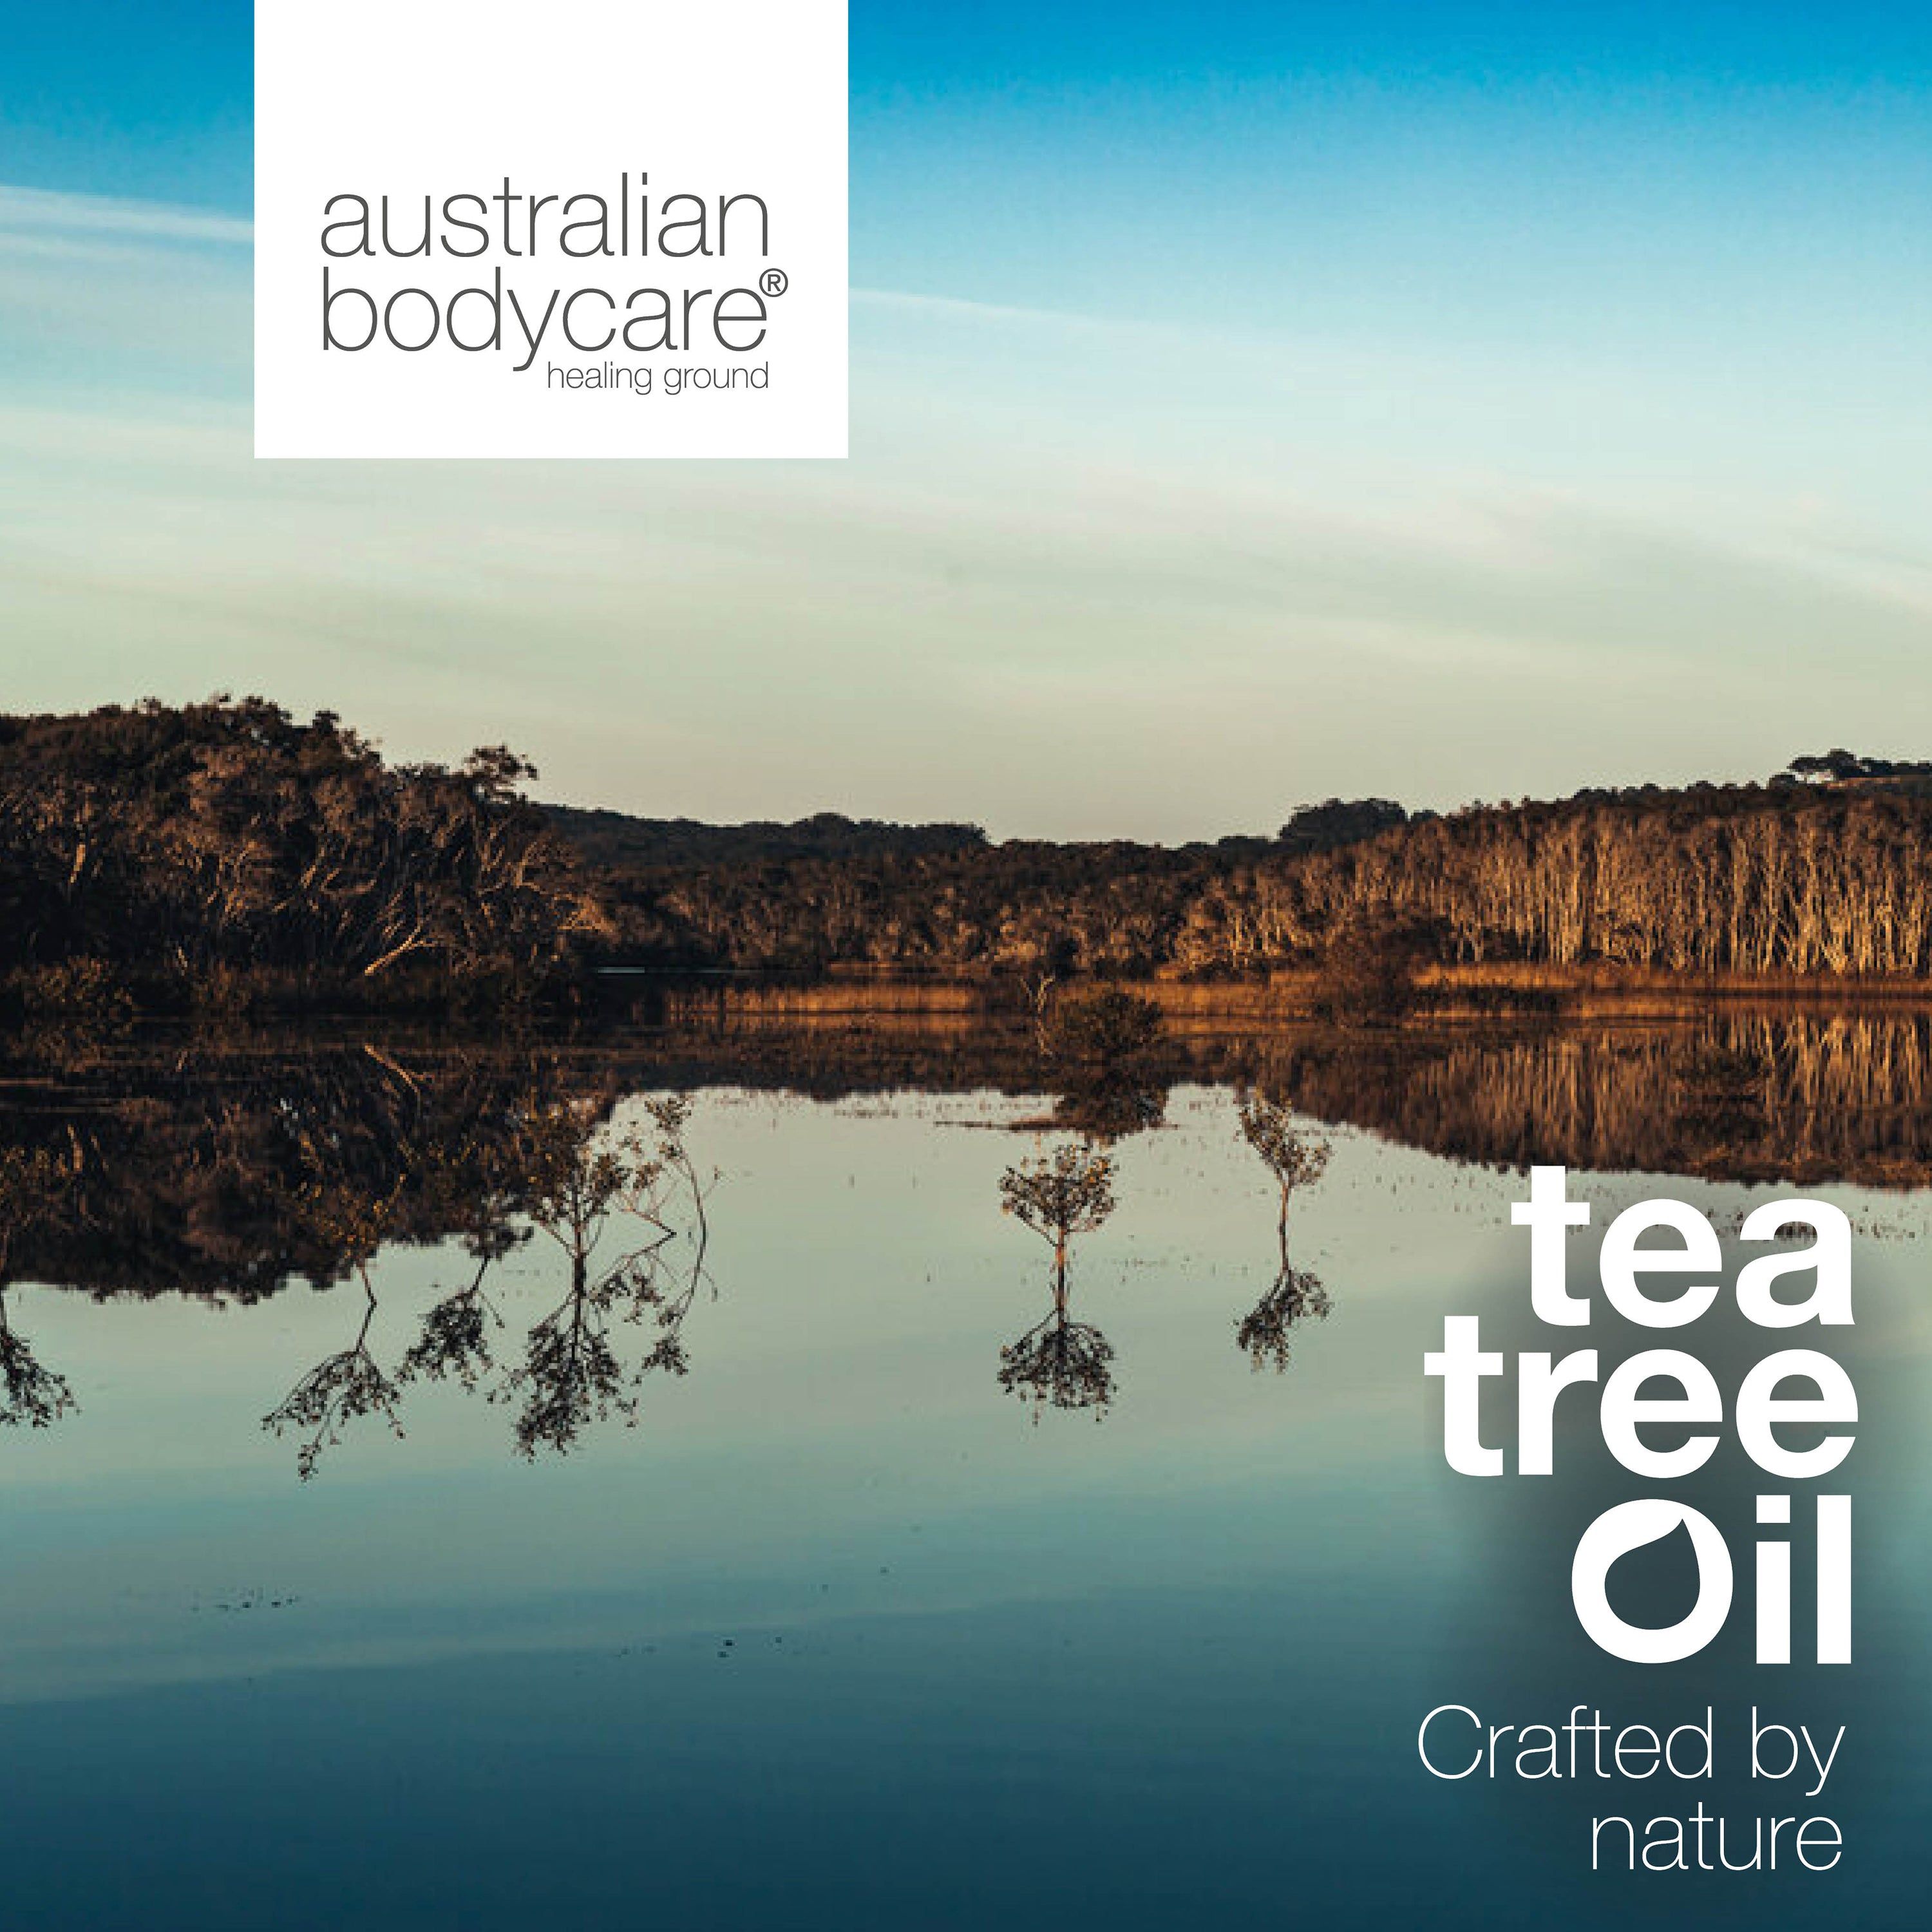 Australian Bodycare Teebaumöl und Lemon Myrtle Anti Schuppen Shampoo